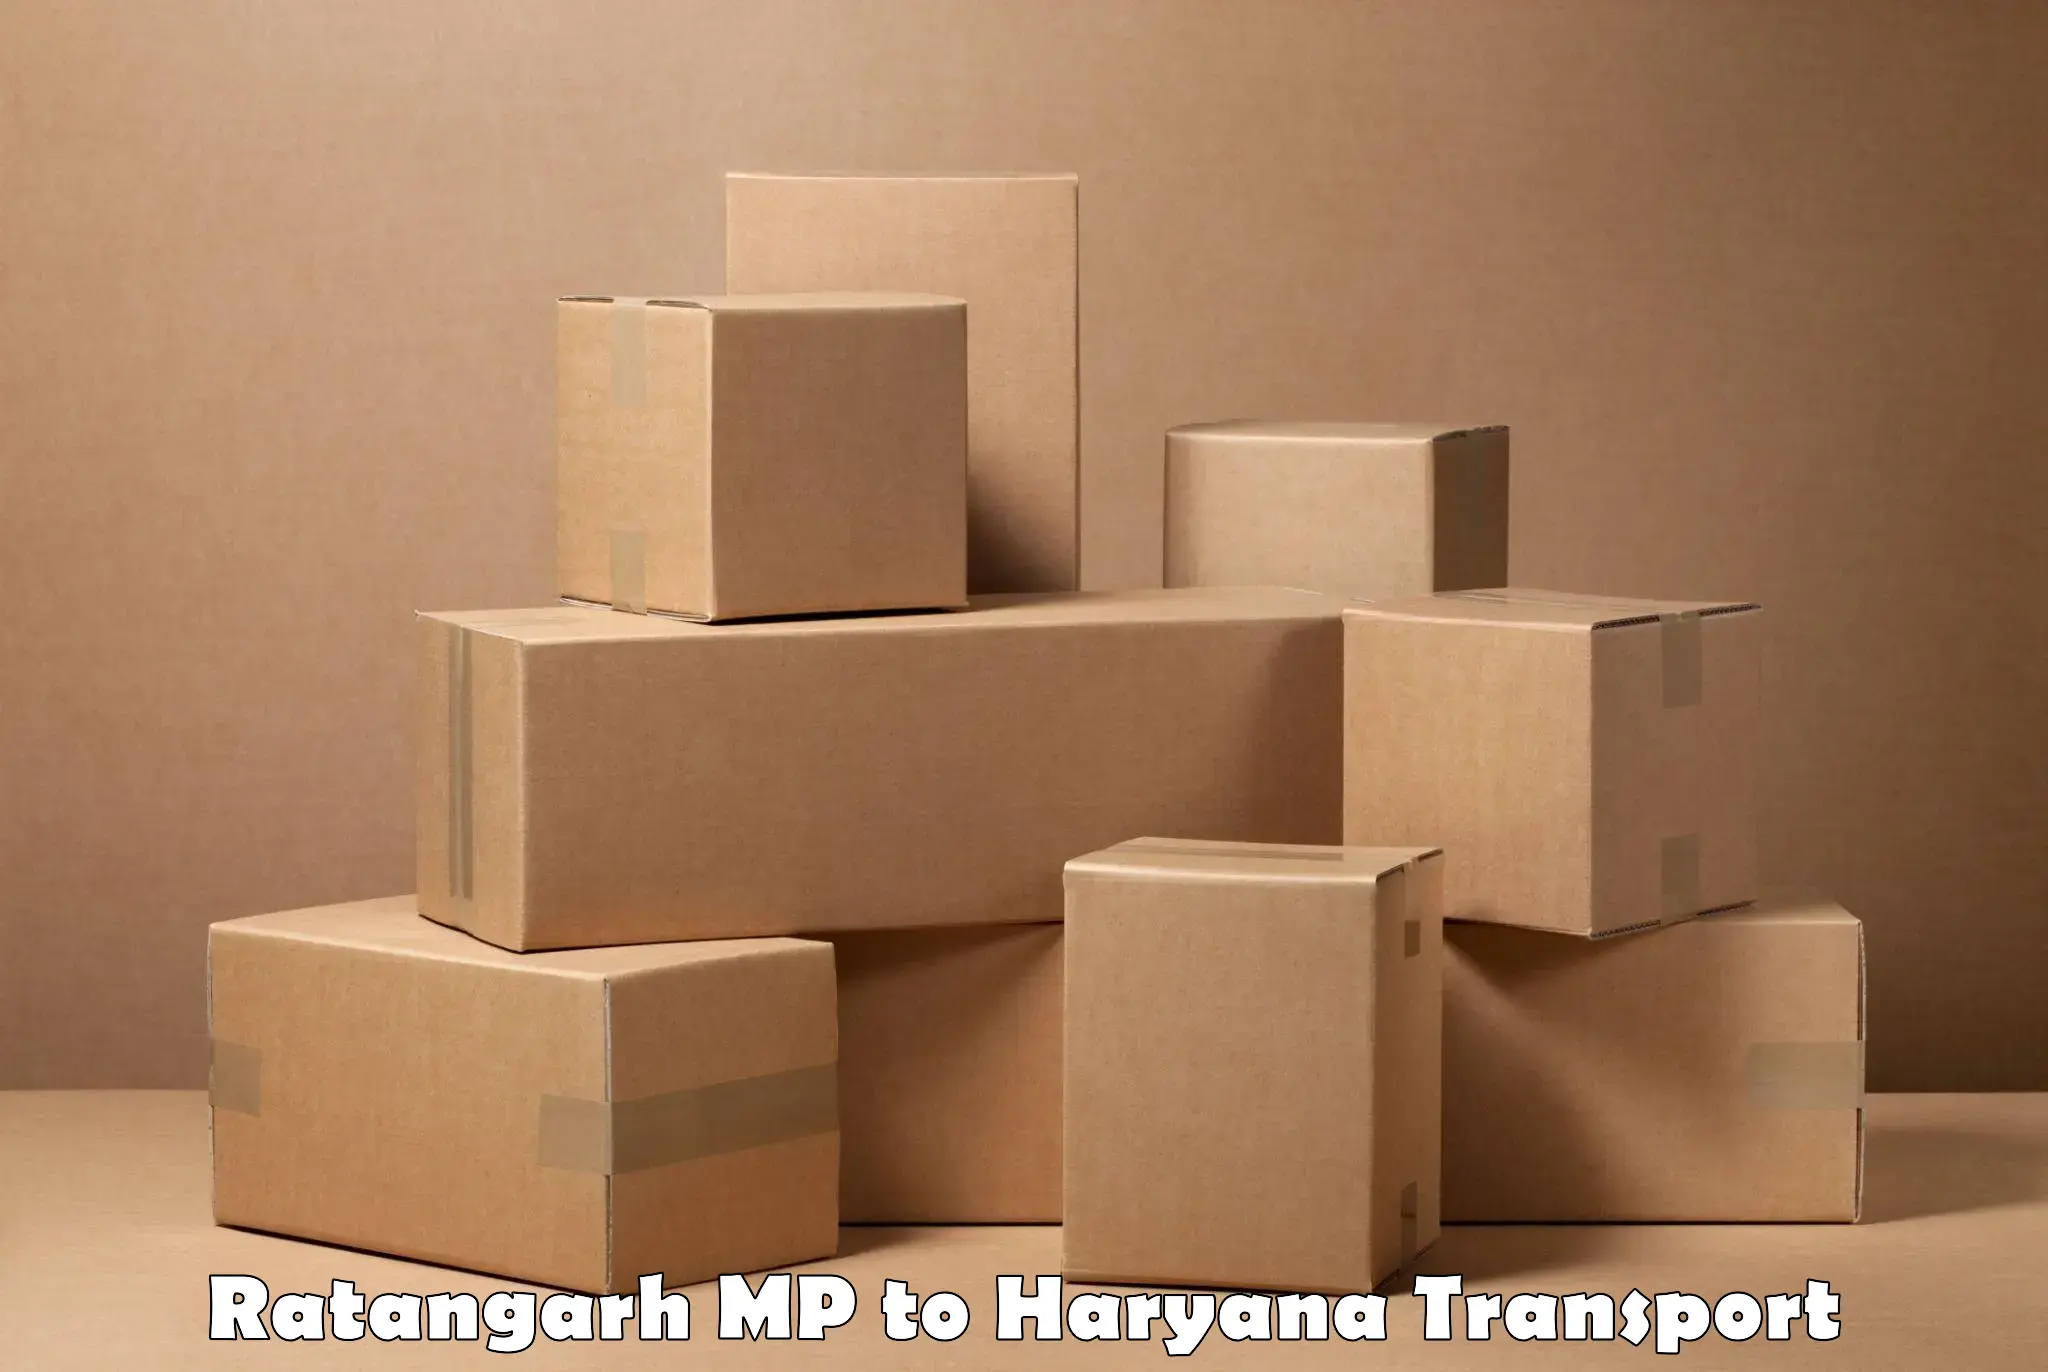 Shipping partner Ratangarh MP to Kalanwali